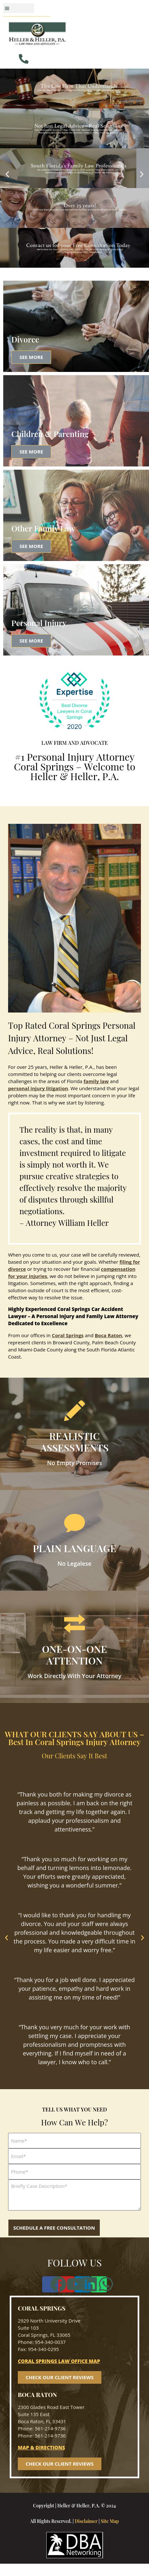 Heller & Heller, P.A. - Coral Springs FL Lawyers